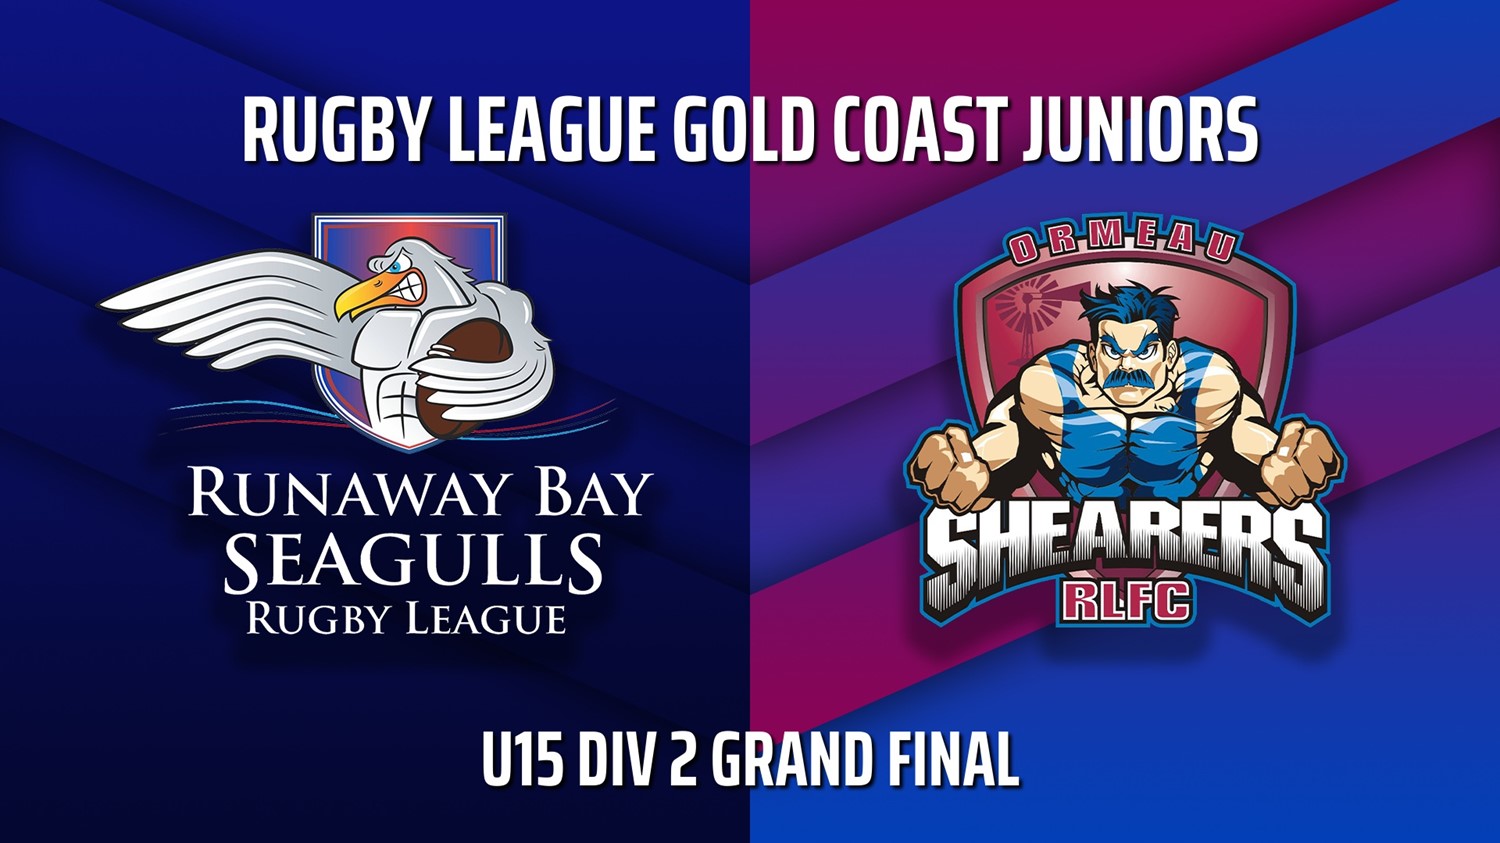 220903-Rugby League Gold Coast Juniors U15 Div 2 Grand Final - Runaway Bay Seagulls v Ormeau Shearers Minigame Slate Image